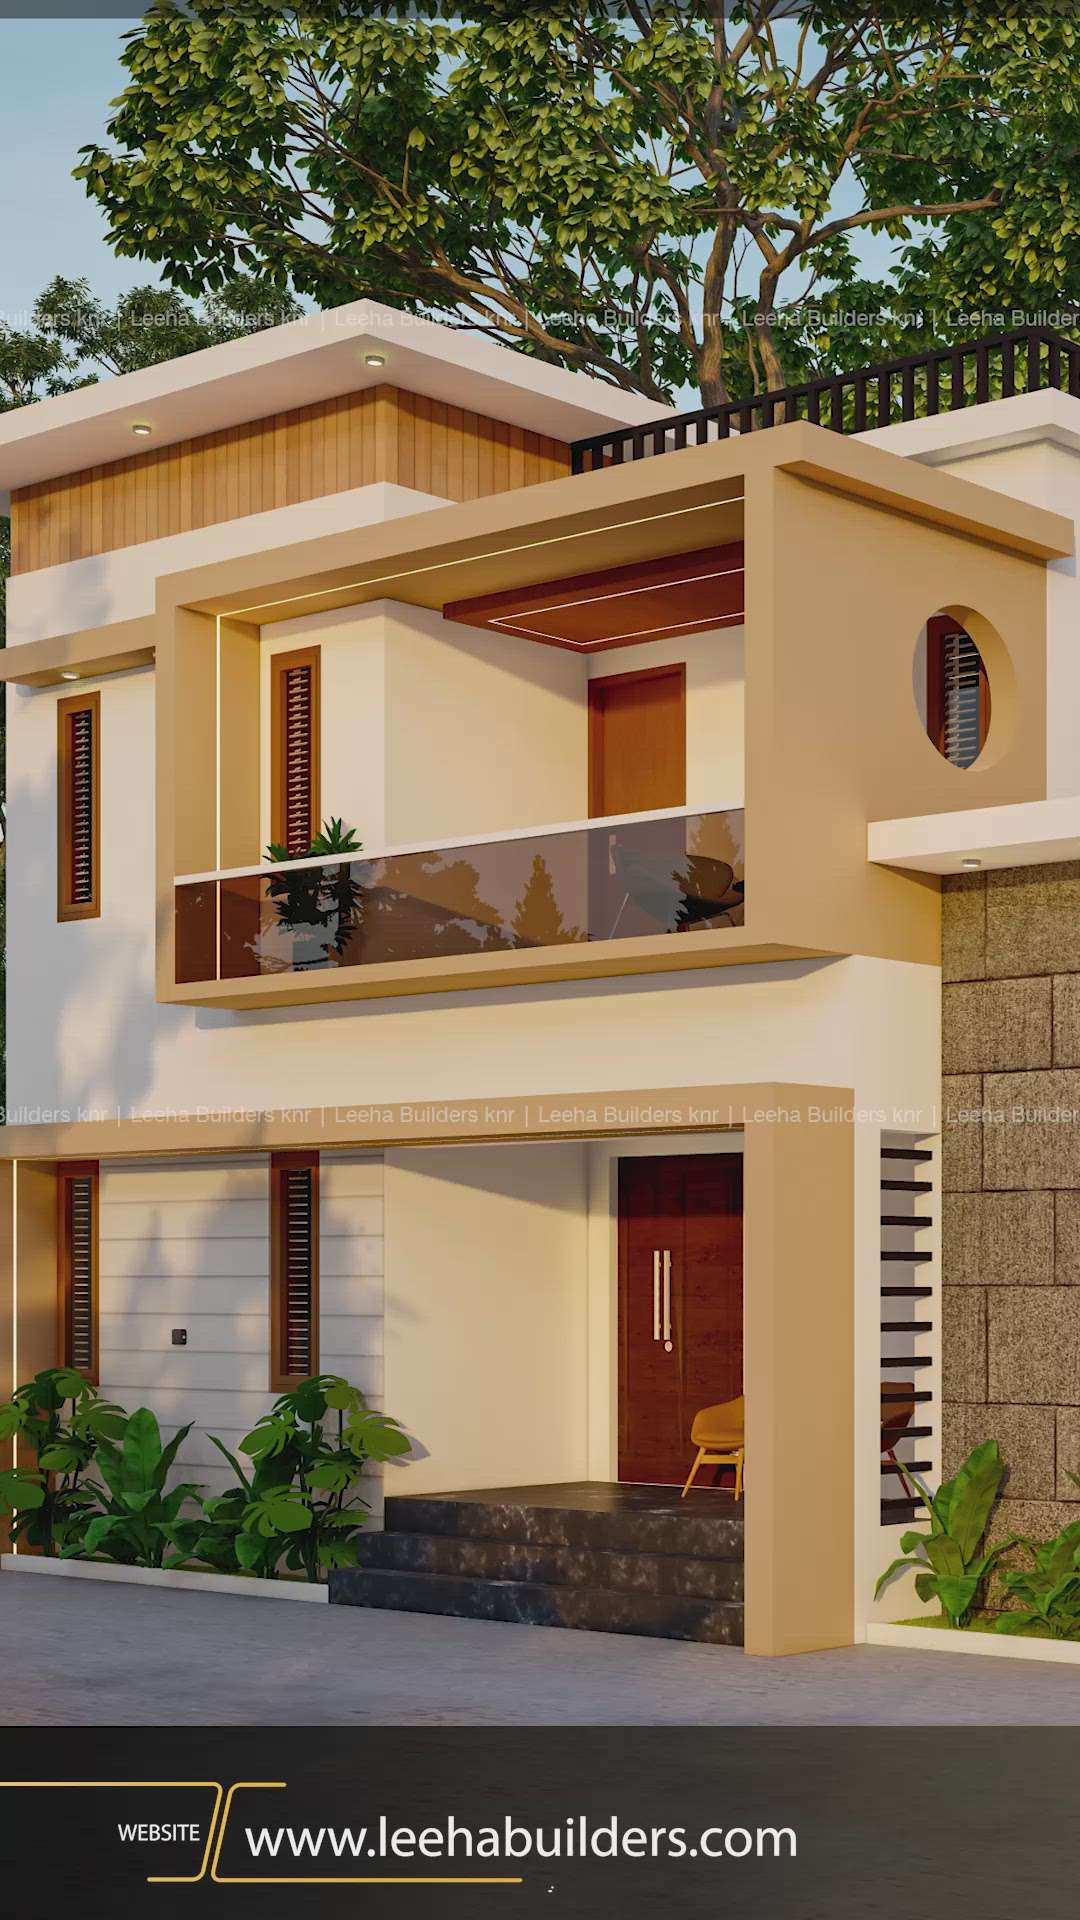 LEEHA BUILDERS & DEVELOPERS 
KOCHI  KANNUR 
CONTACT ☎️: 8089902878
https://wa.me/+918089902878

#leehabuilders #leehaconstruction
#constructionsite #home #HouseDesigns #ElevationHome #SmallHouse  #HouseConstruction #homesweethome #3DPlans #35LakhHouse #steelstructure  #pavingstone #KeralaStyleHouse  #keralahomedesignz  #modernkitchen  #ModularKitchen
 #budgethomeplan  #BuildingSupplies  #buildersinkerala  #BathroomTIles  #homesweethome #veed  #InteriorDesigner